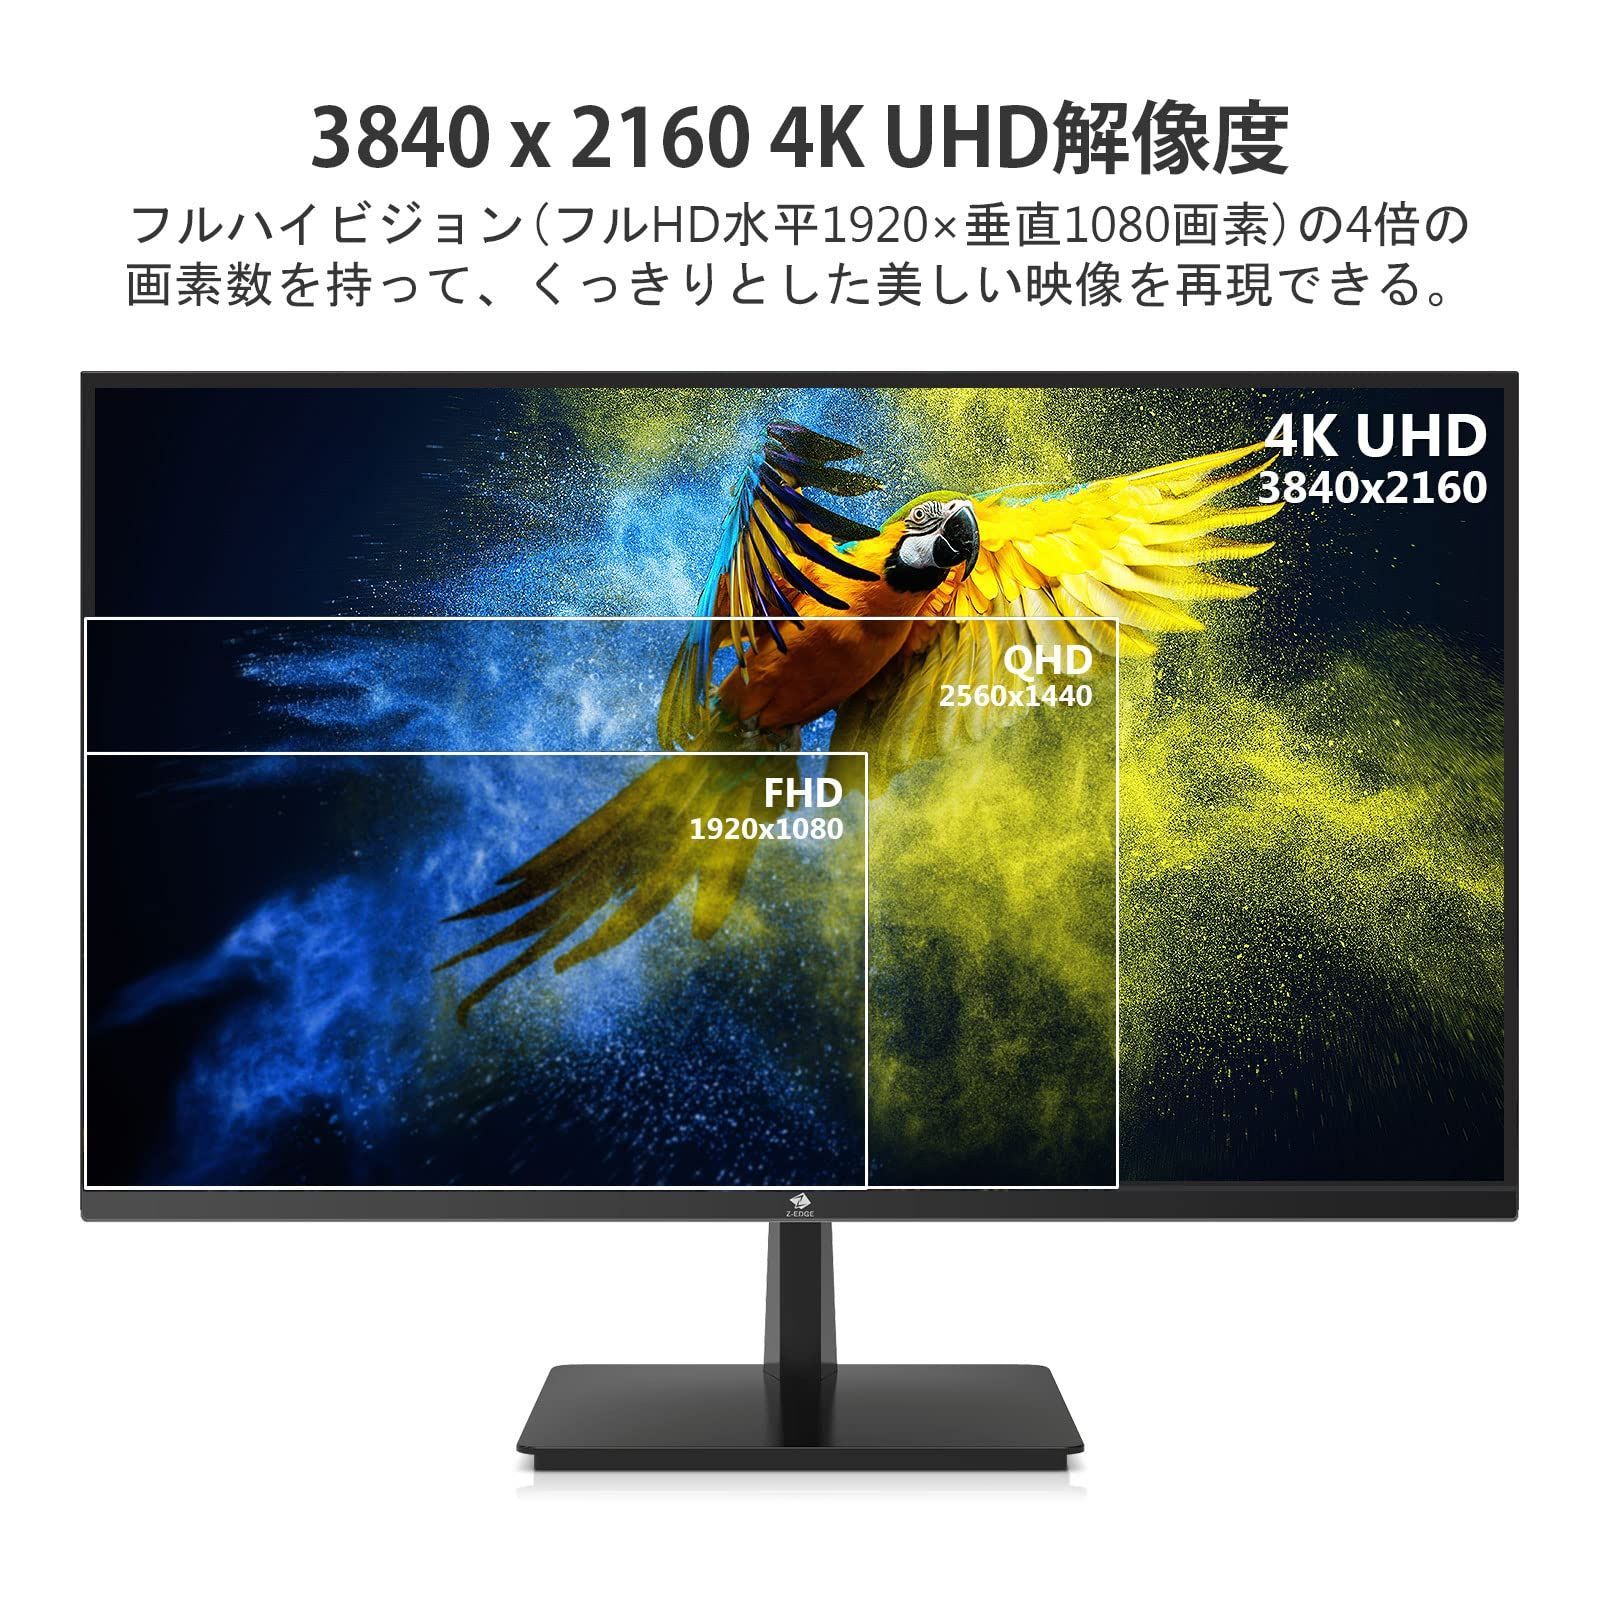 Z-EDGE 384x216非光沢IPSパネル超薄型HDR標準輝度:35cd